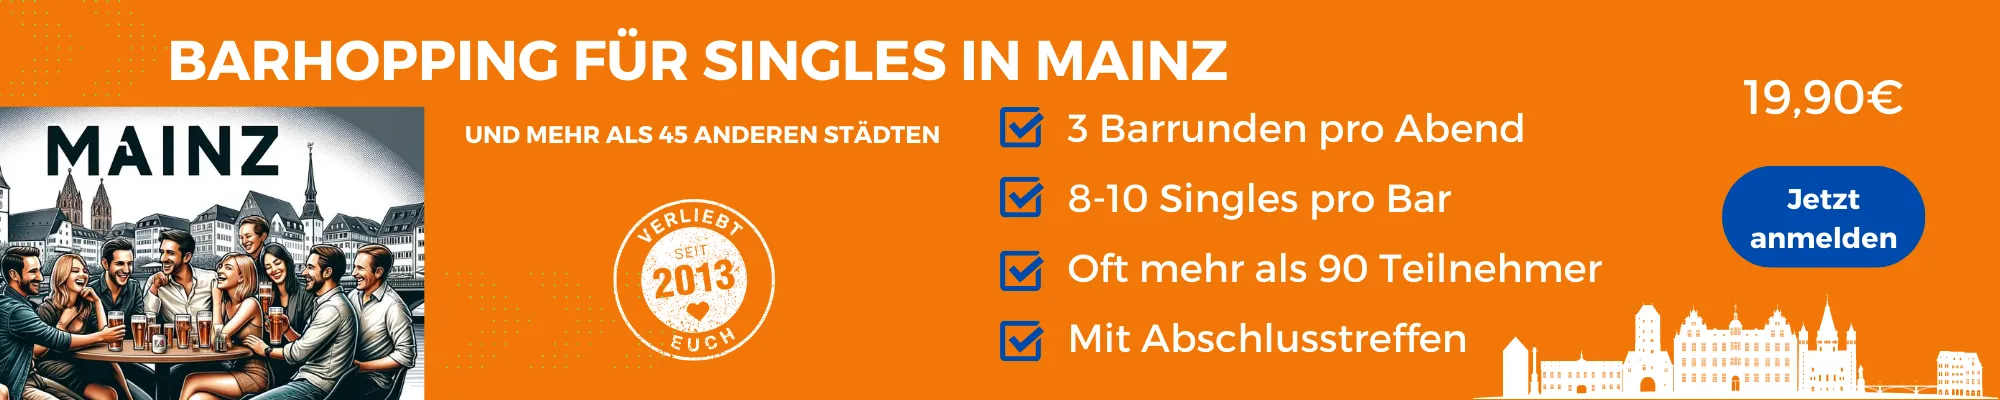 Face to Face Mainz, Barhopping für Singles in Mainz